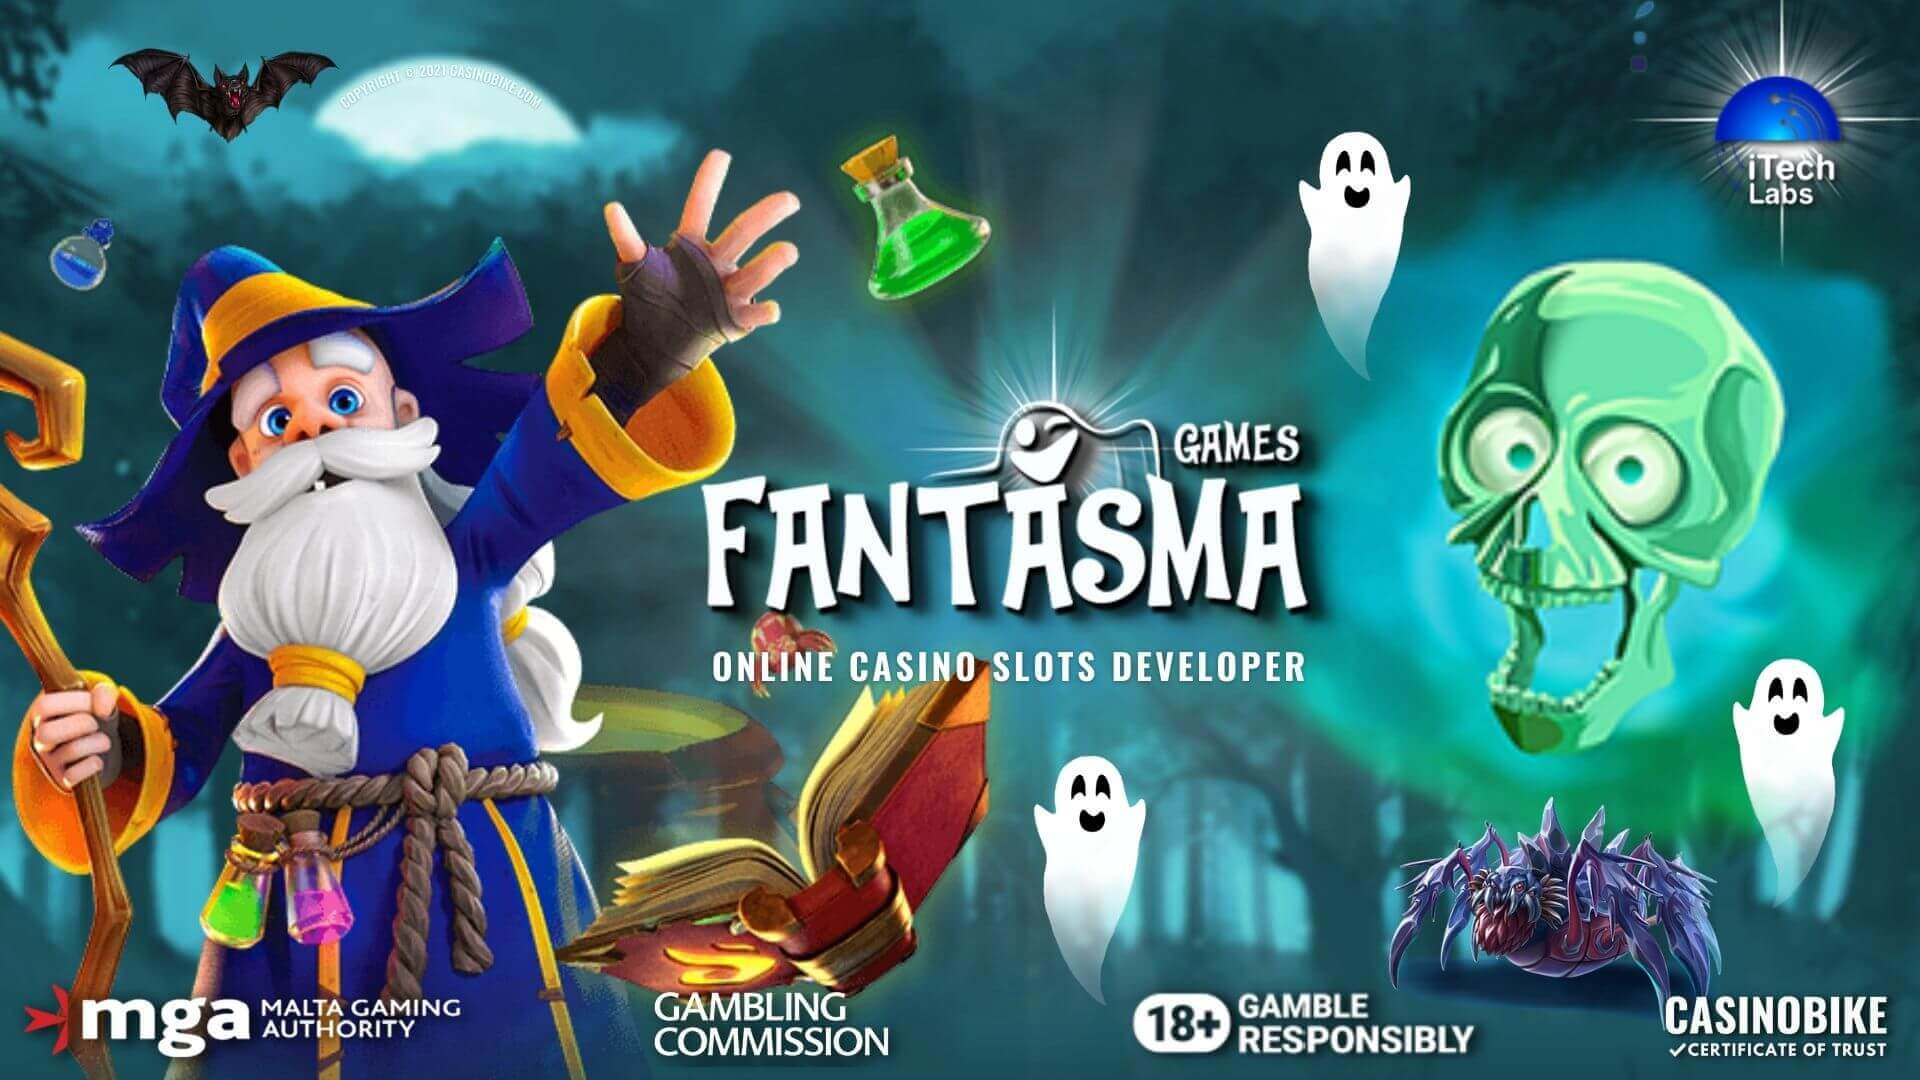 Fantasma Games Online Casino Slots Developer